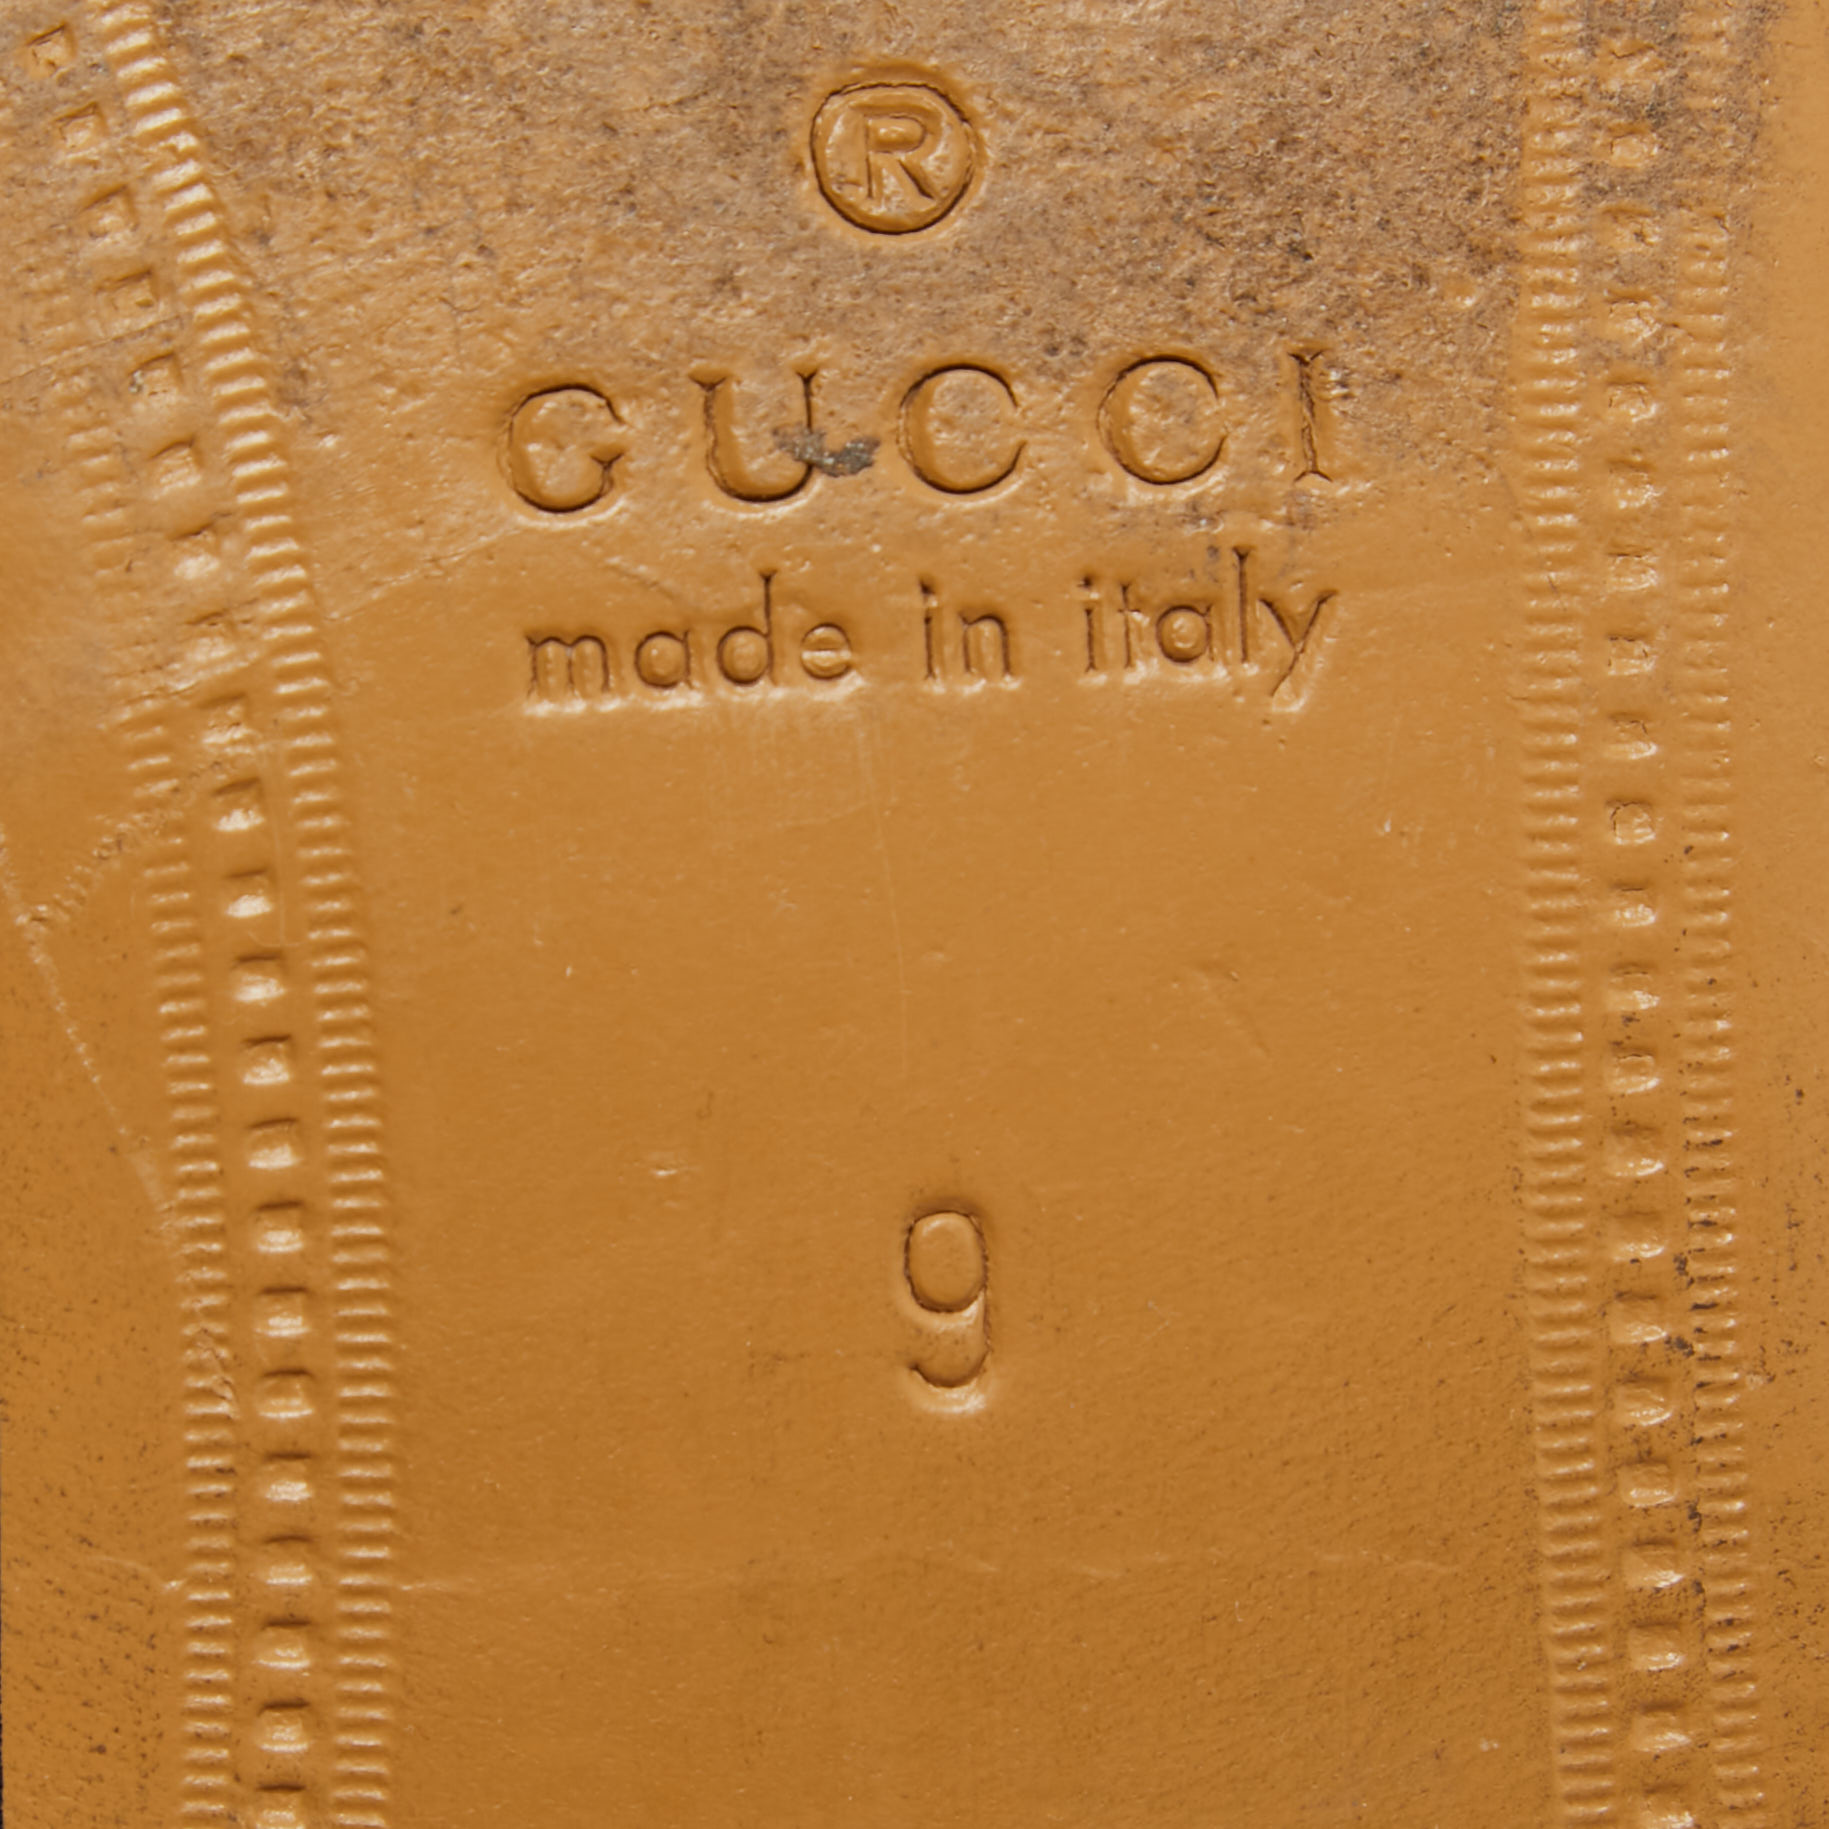 Gucci Black Leather Horsebit Mules Size 43